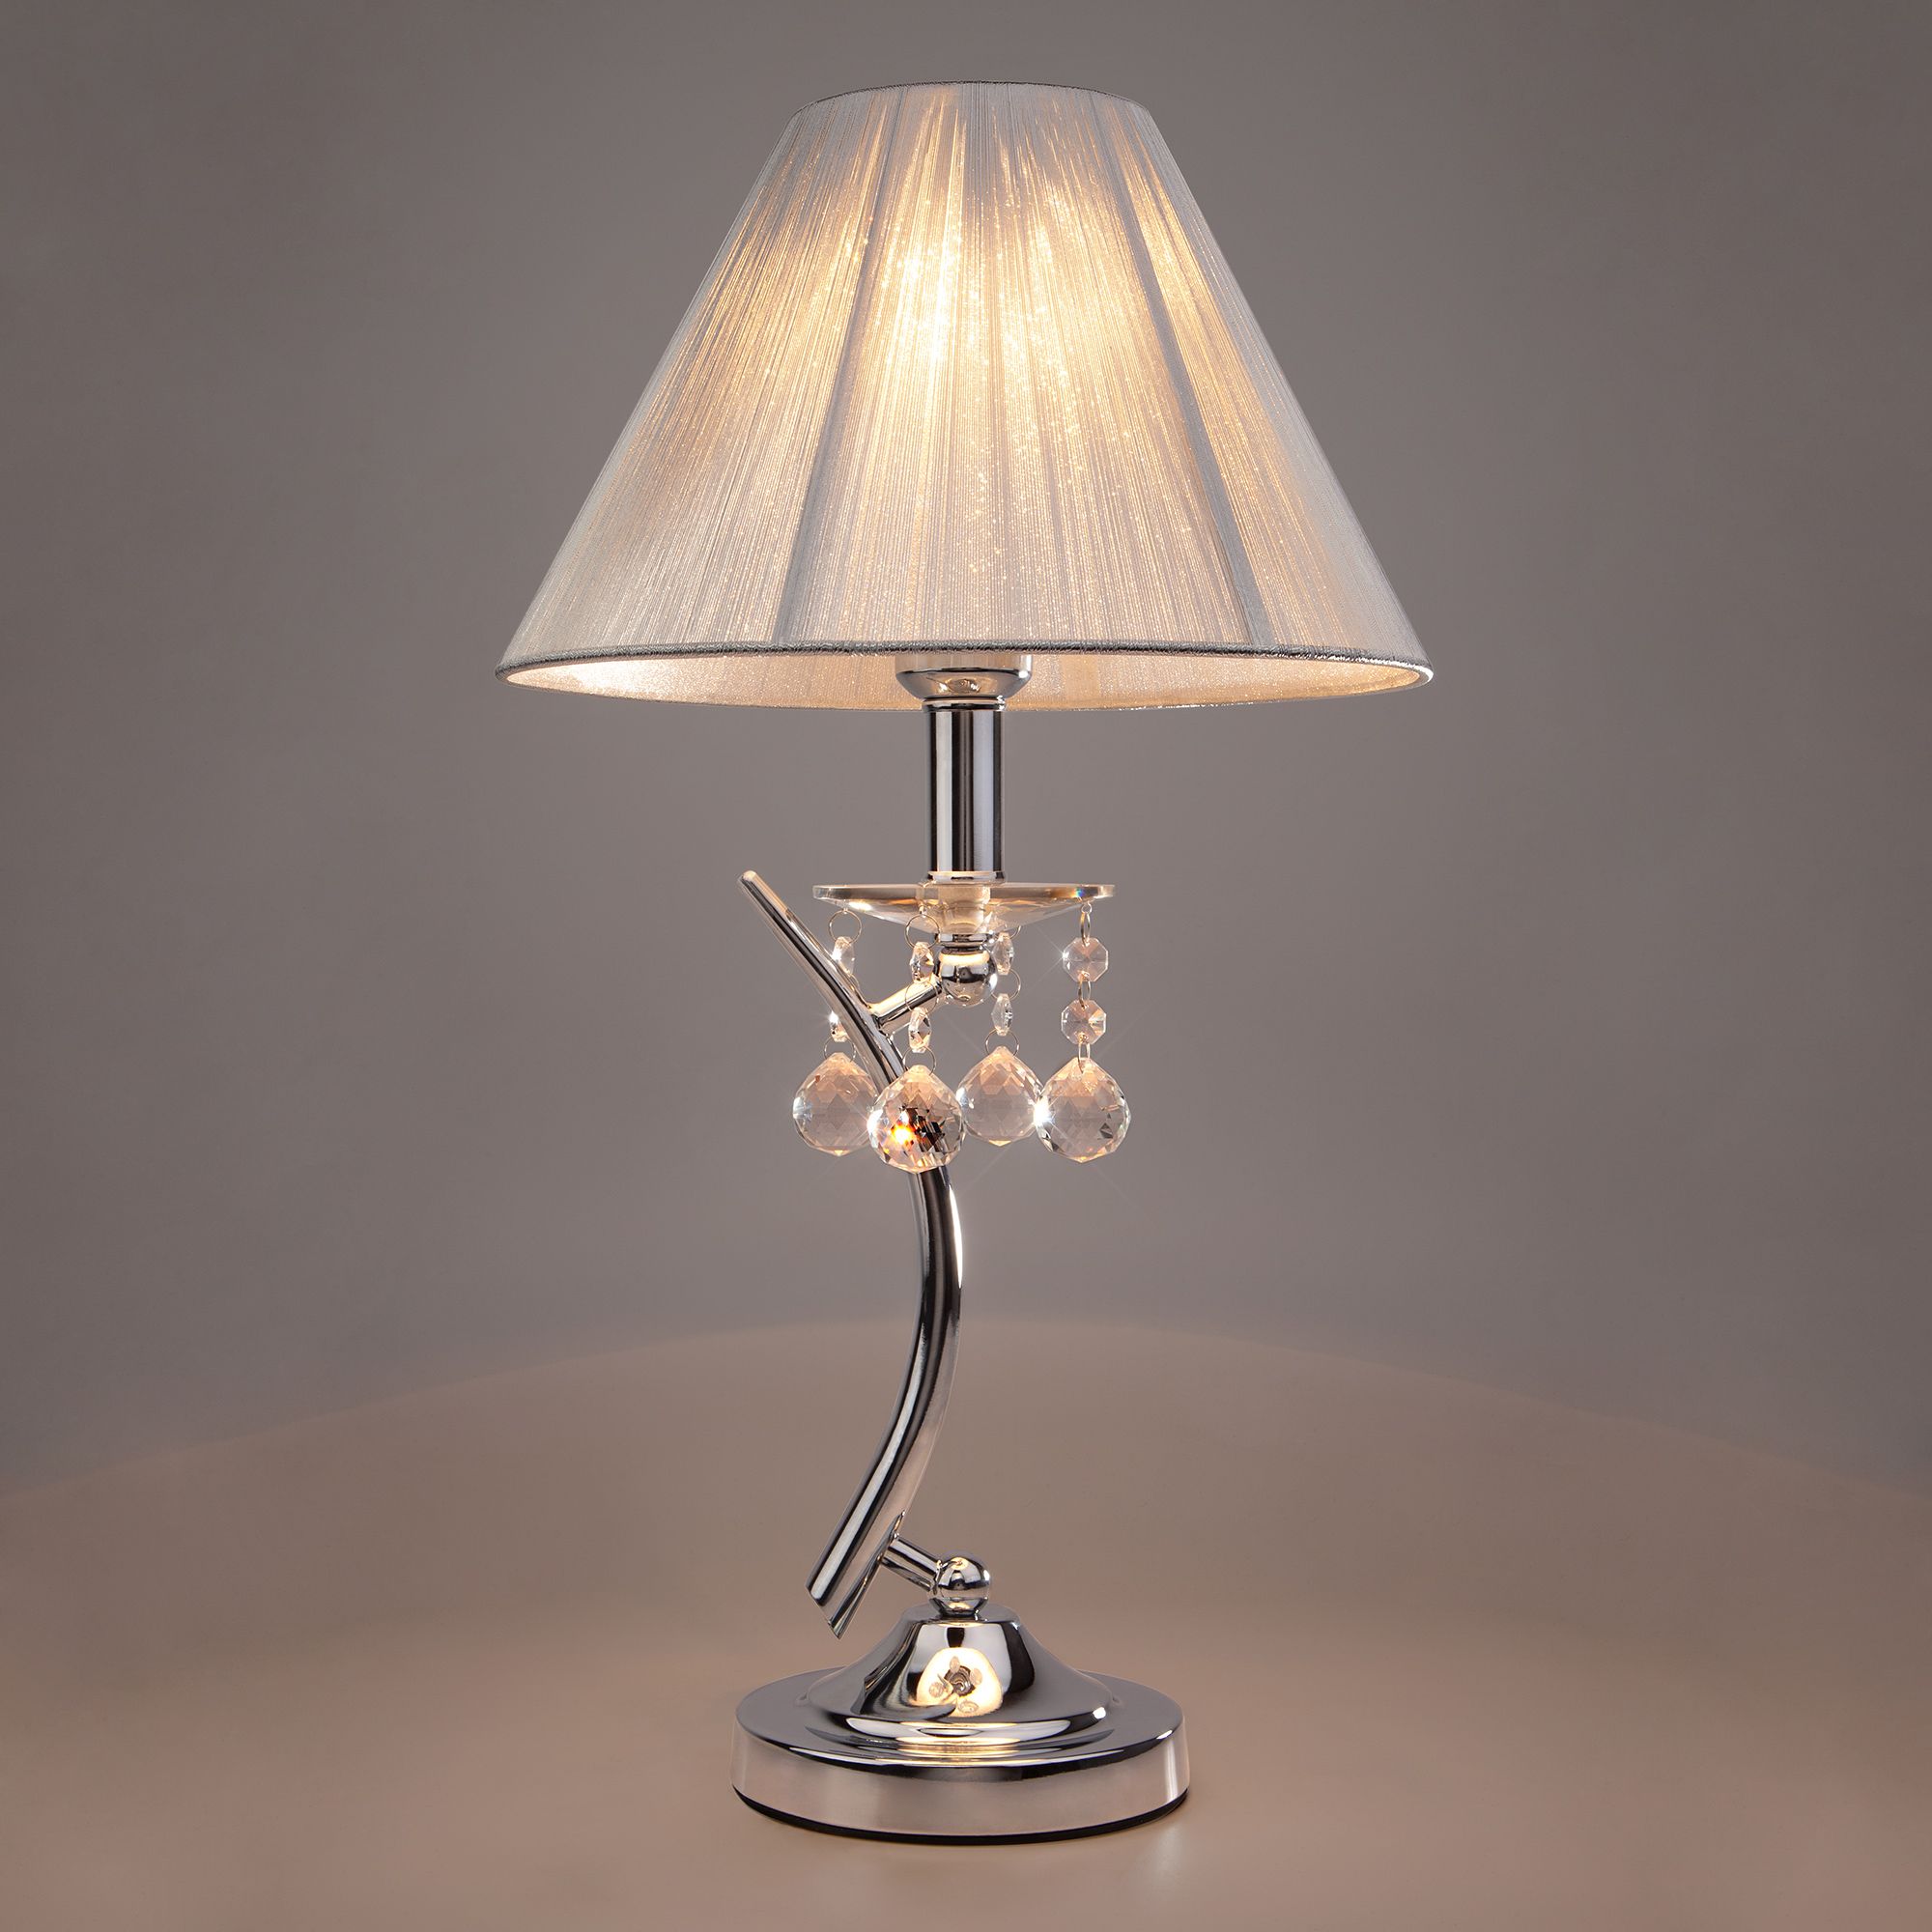 Классическая настольная лампа Eurosvet Odette 1087/1 хром. Фото 3